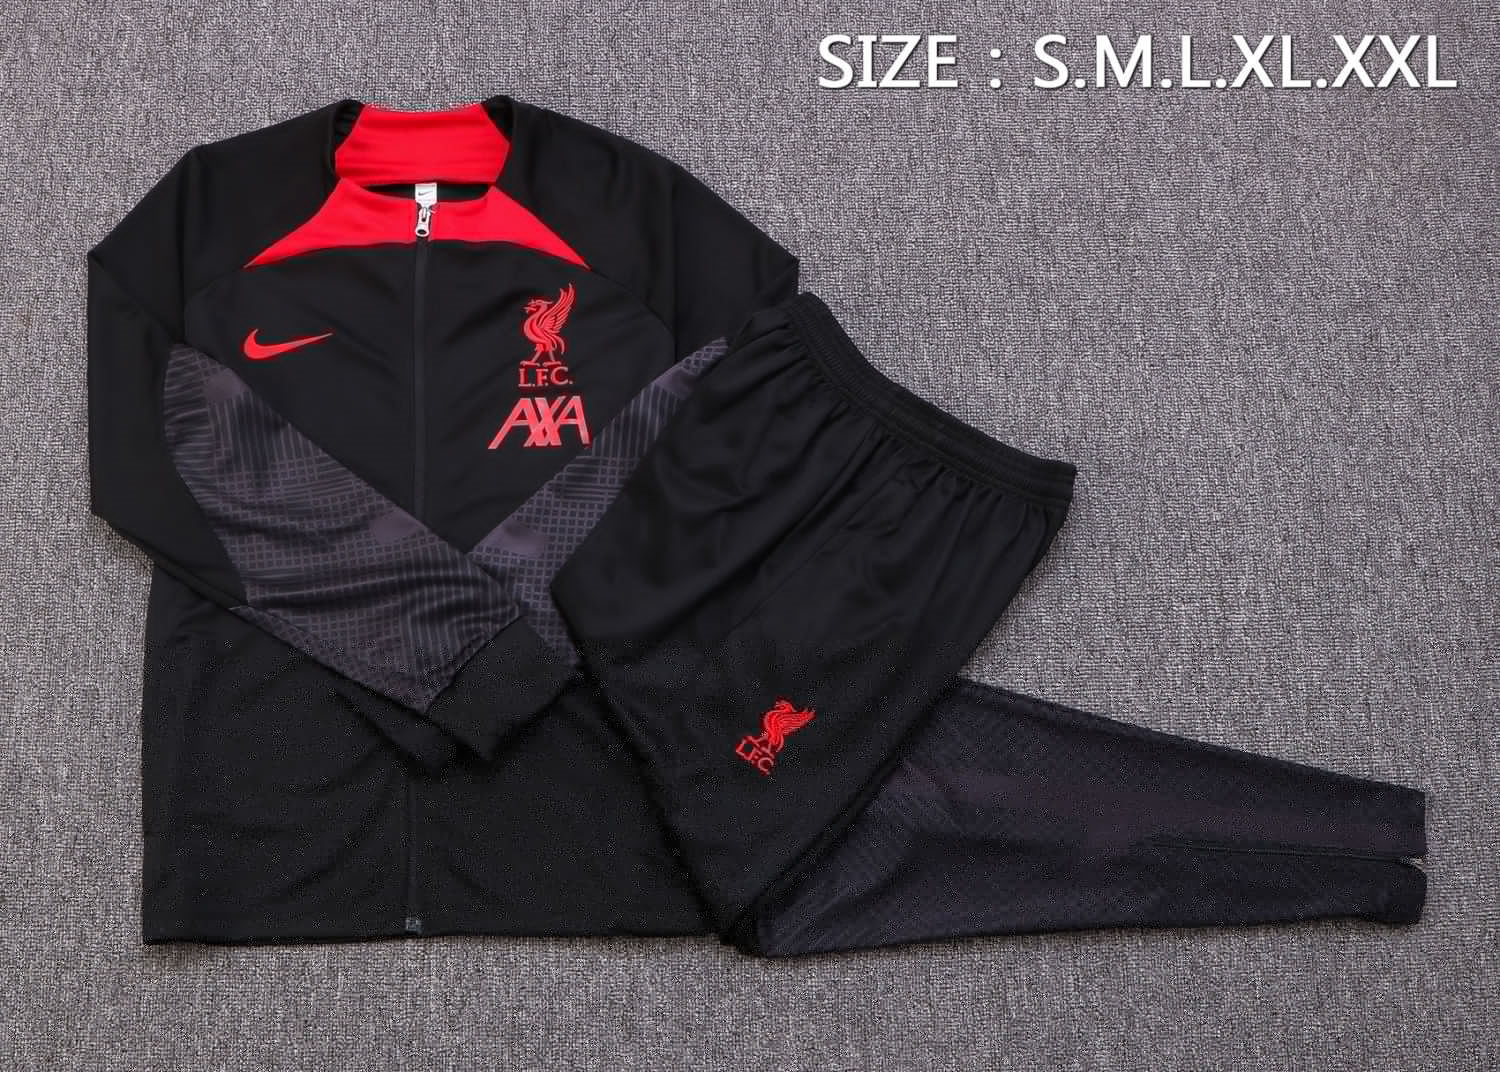 Liverpool Soccer Training Suit Jacket + Pants Black 2022/23 Mens